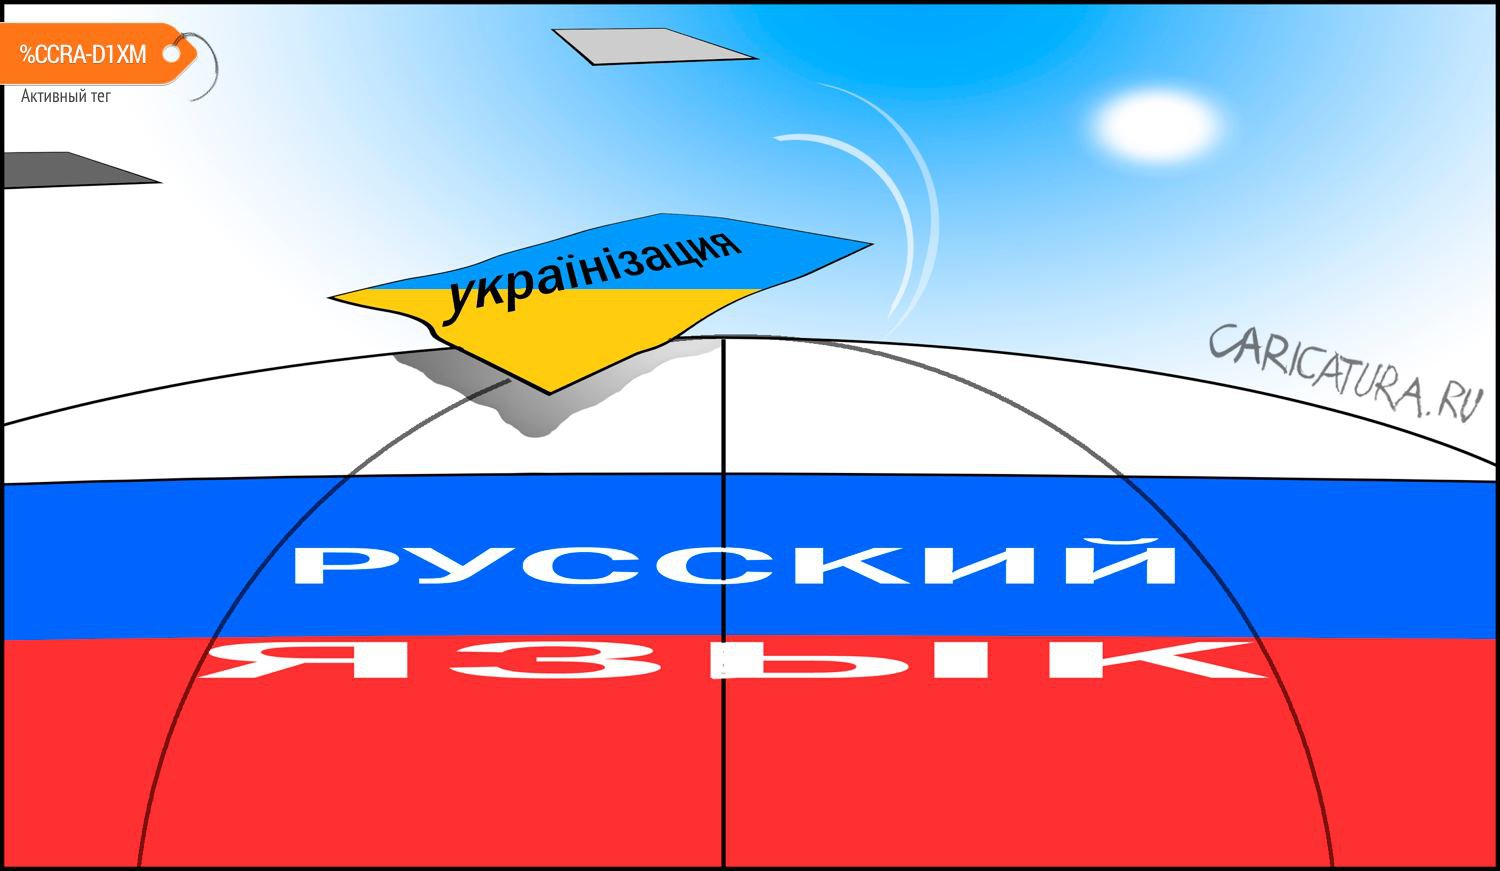 Карикатура "Украинизация", Александр Уваров